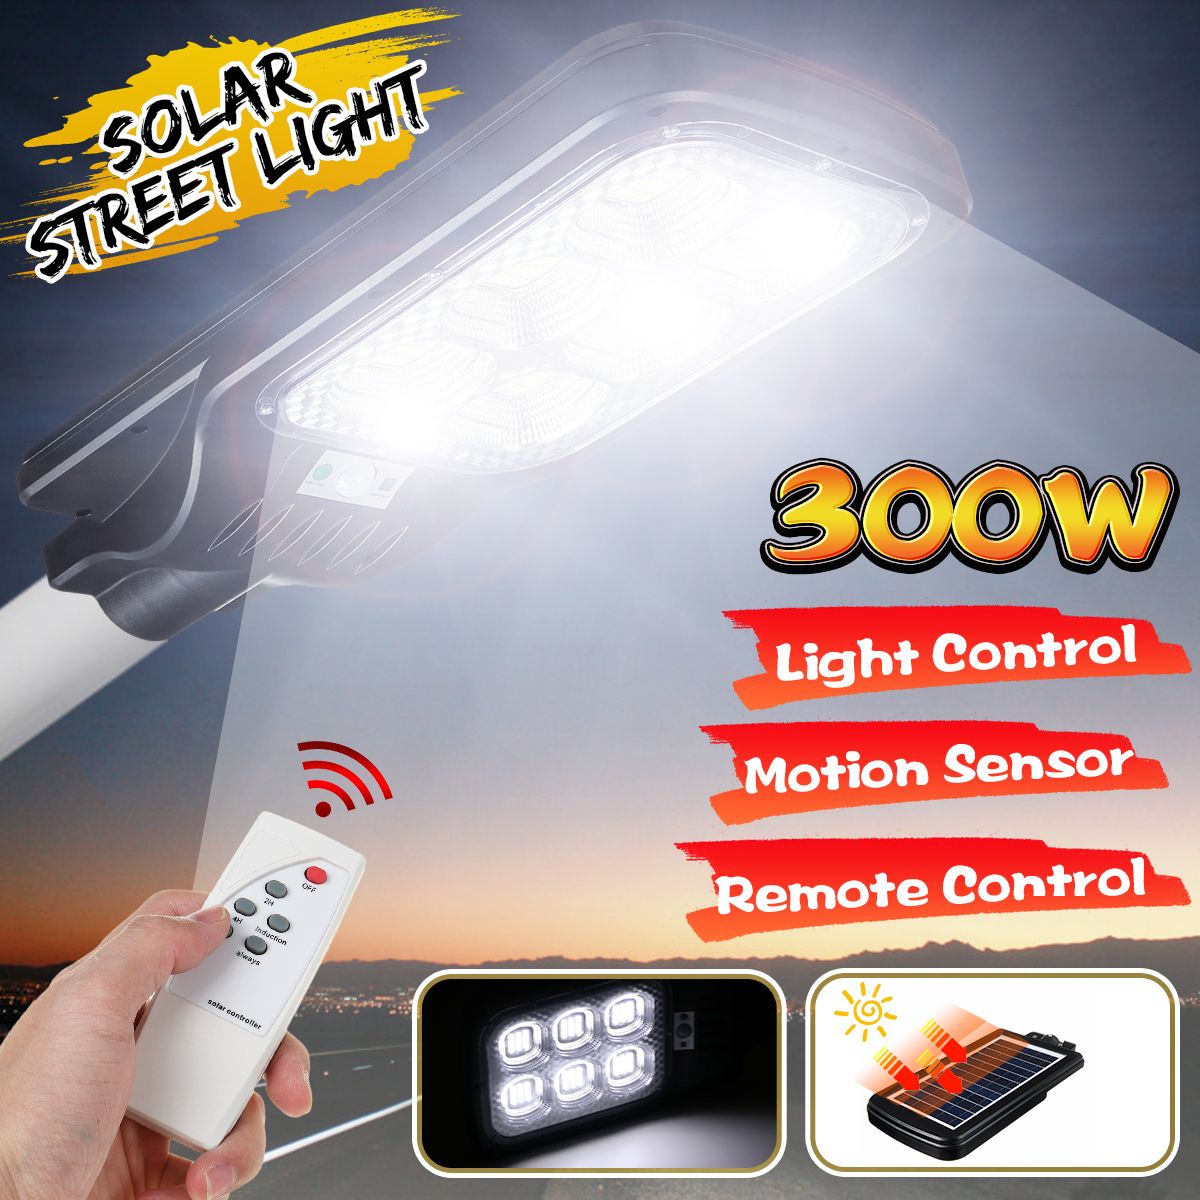 Solar-Street-Light-108LED-360W-Button-Control-Light-Control-Timing-Control-Remote-Control-PIR-Motion-1638819